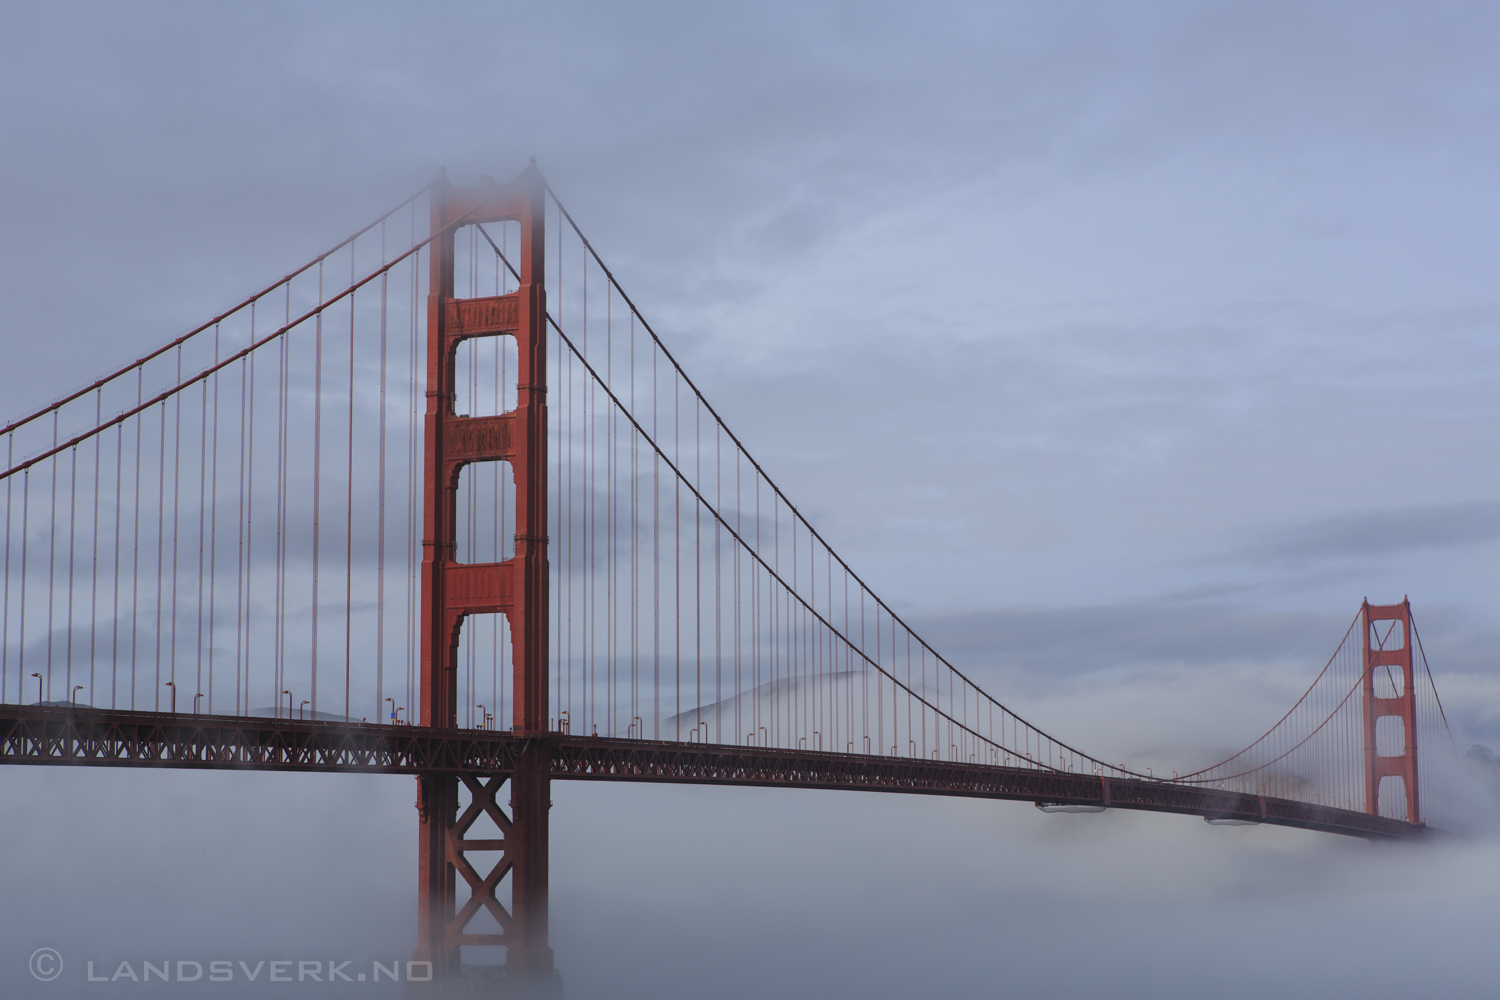 San Francisco, California. 

(Canon EOS 5D Mark III / Canon EF 24-70mm f/2.8 L USM)